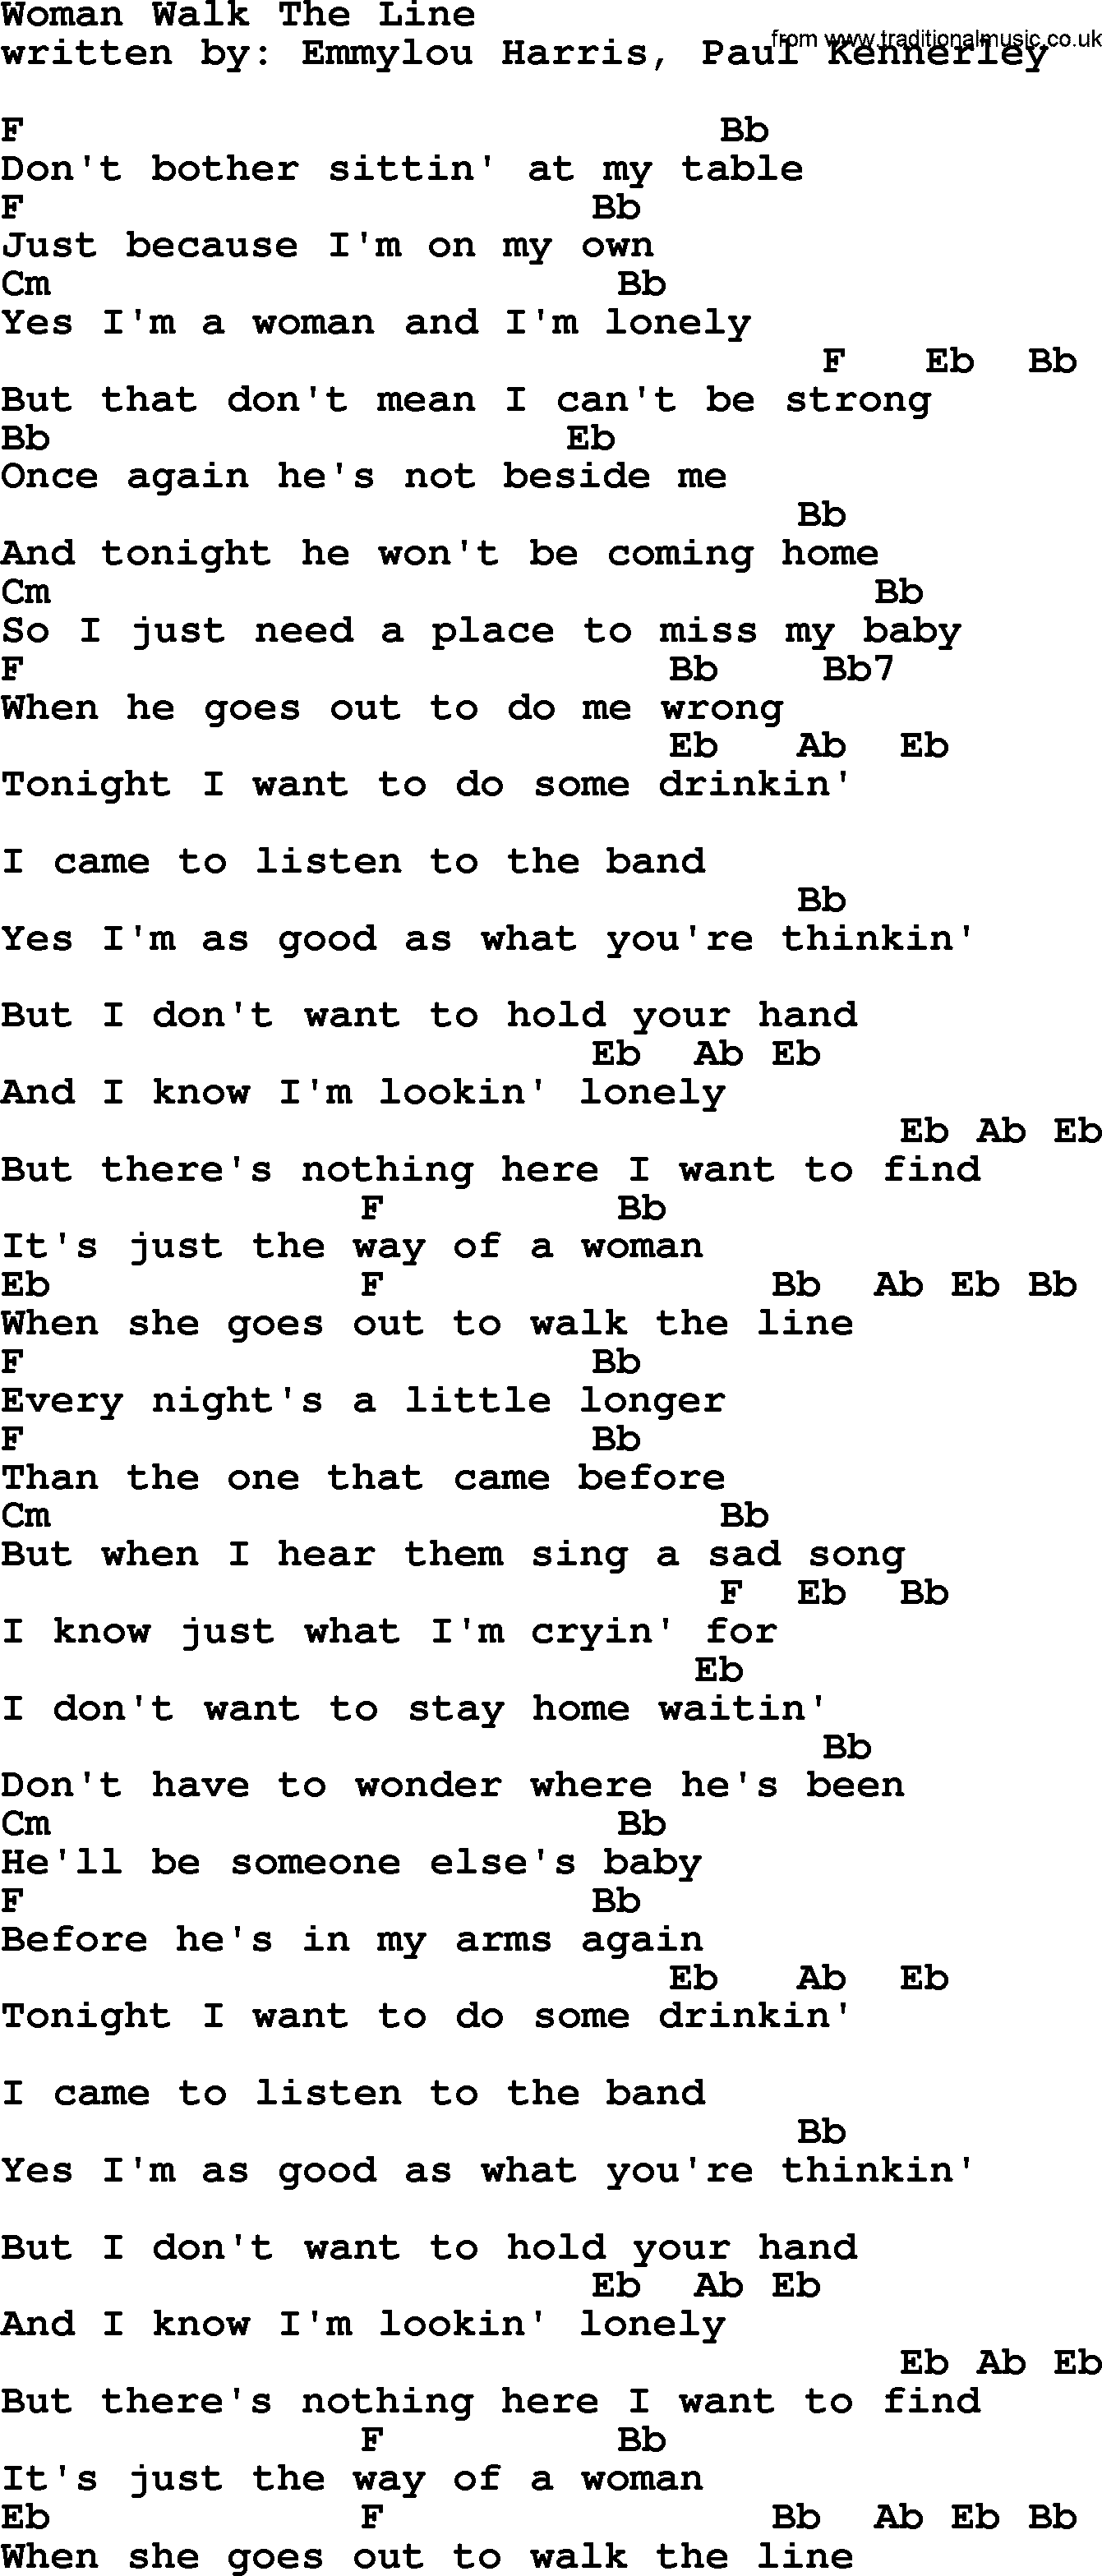 Emmylou Harris song: Woman Walk The Line lyrics and chords